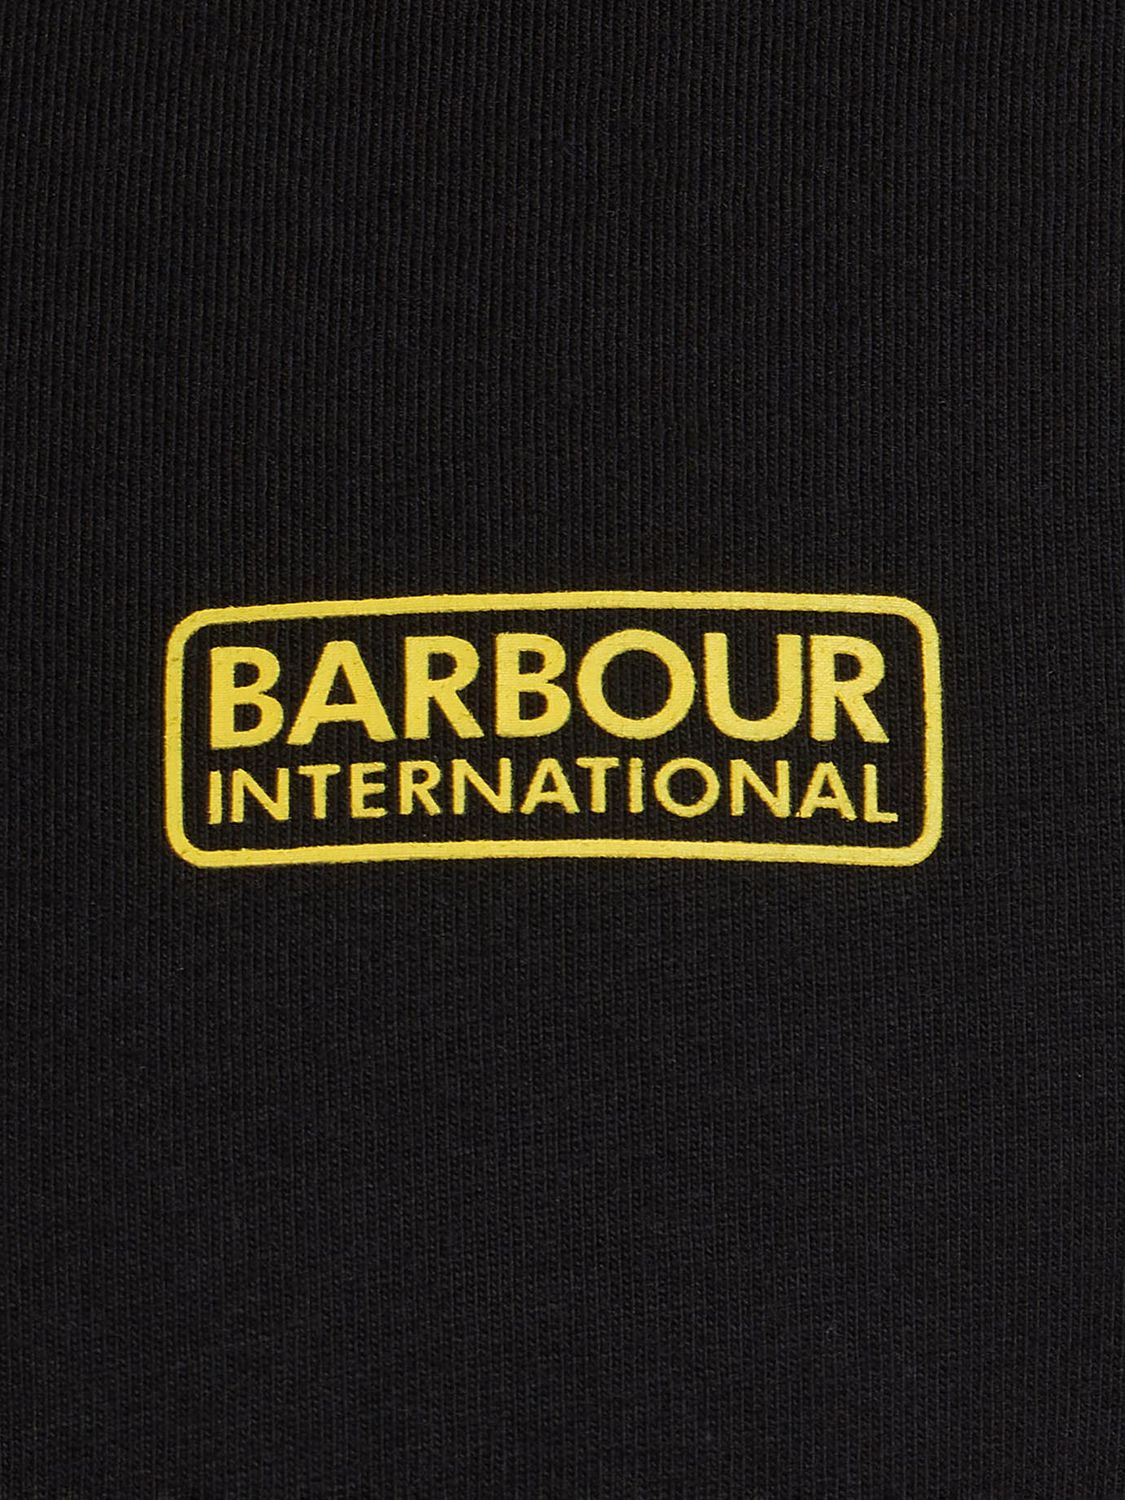 Buy Barbour International Slim Fit Crew T-Shirt Online at johnlewis.com